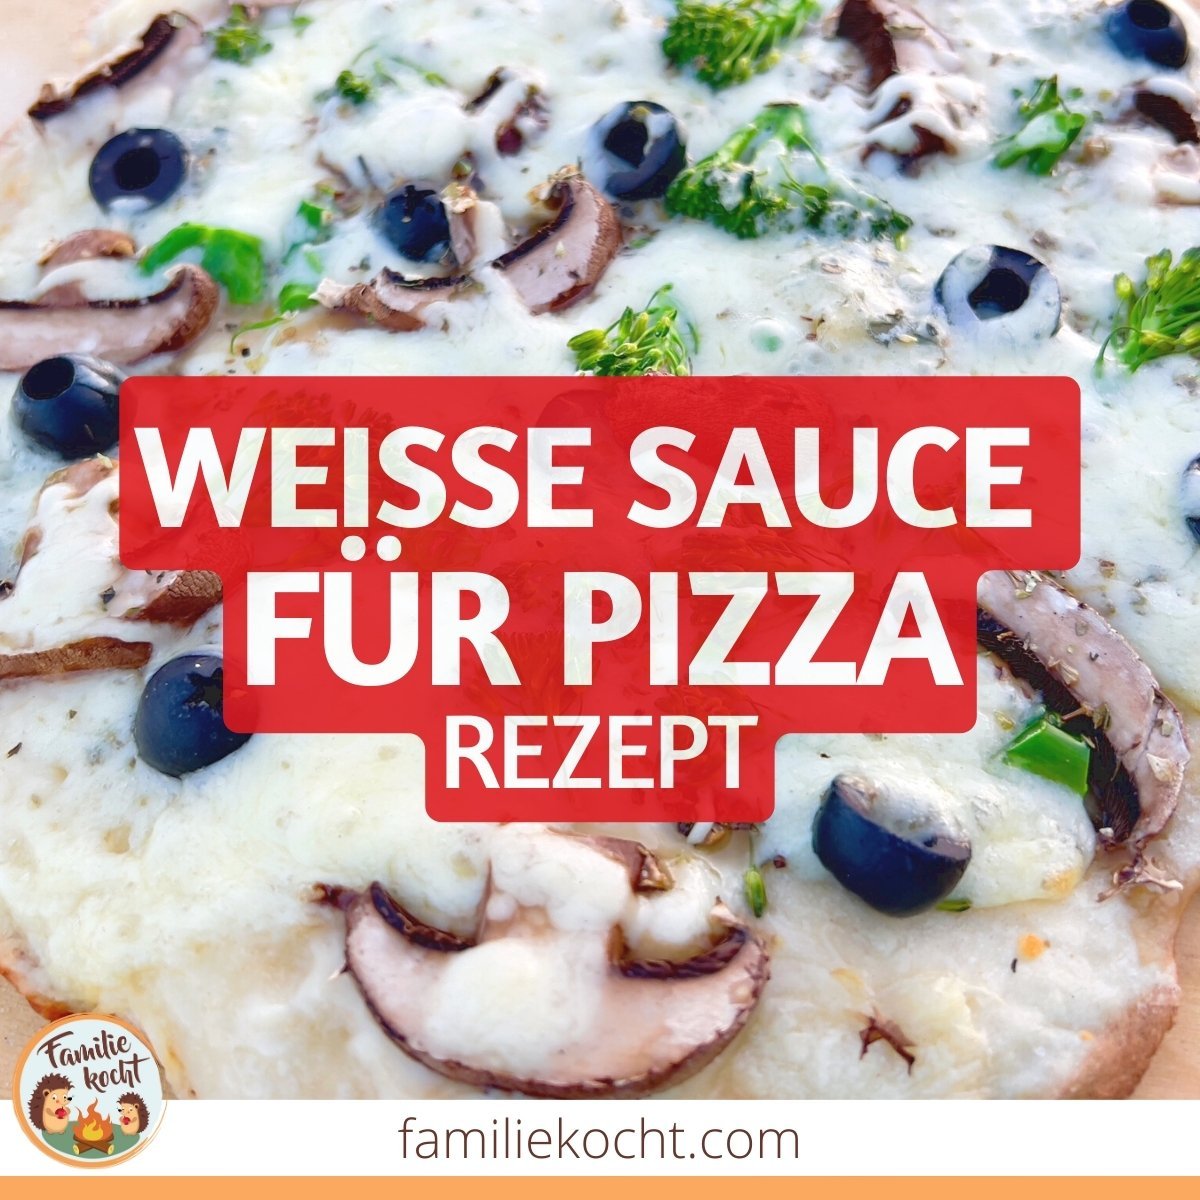 Weiße Sauce für Pizza